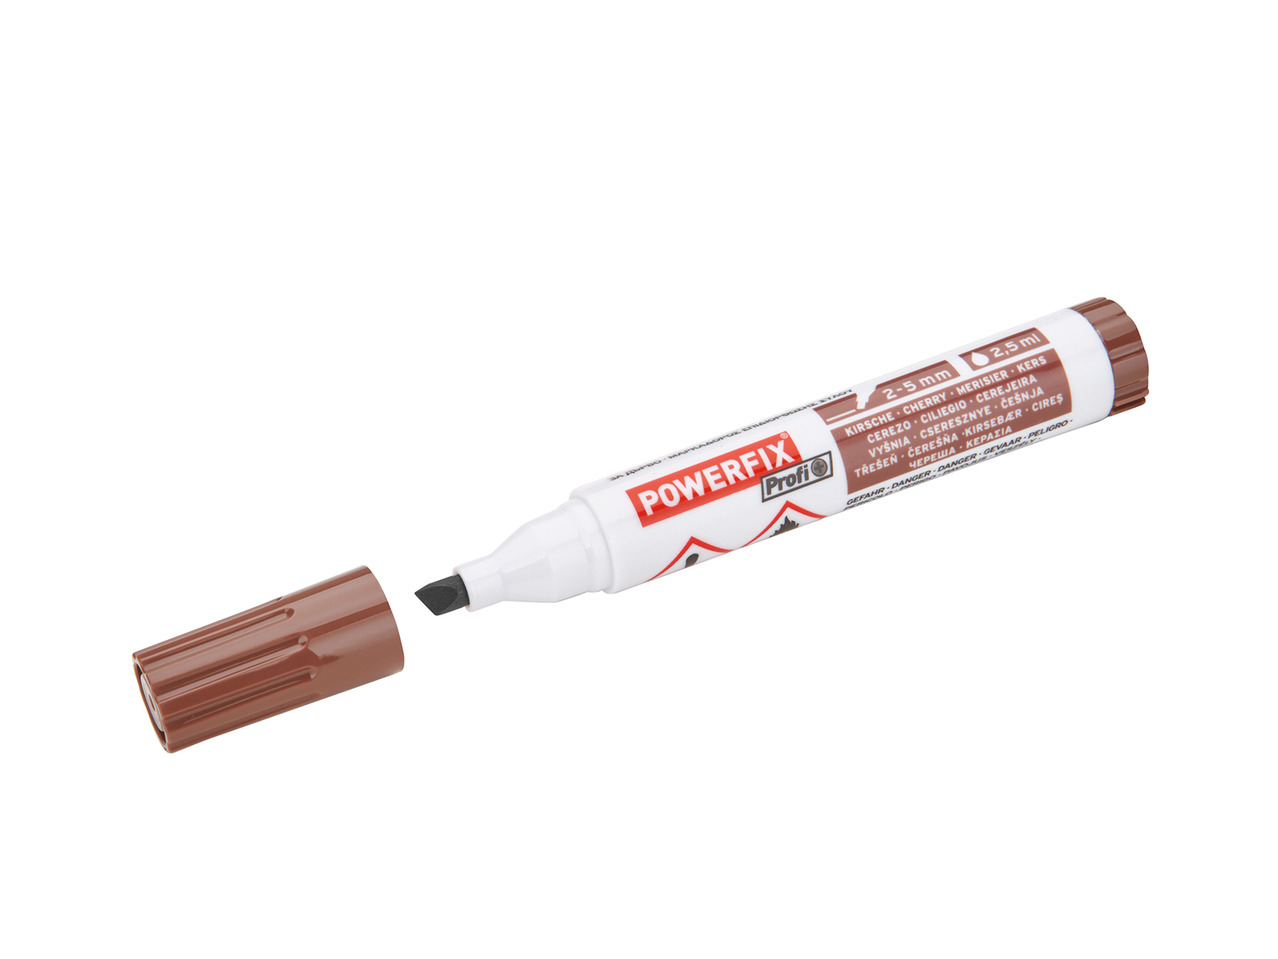 Powerfix Profi Wood Touch-up / Grouting Pen1